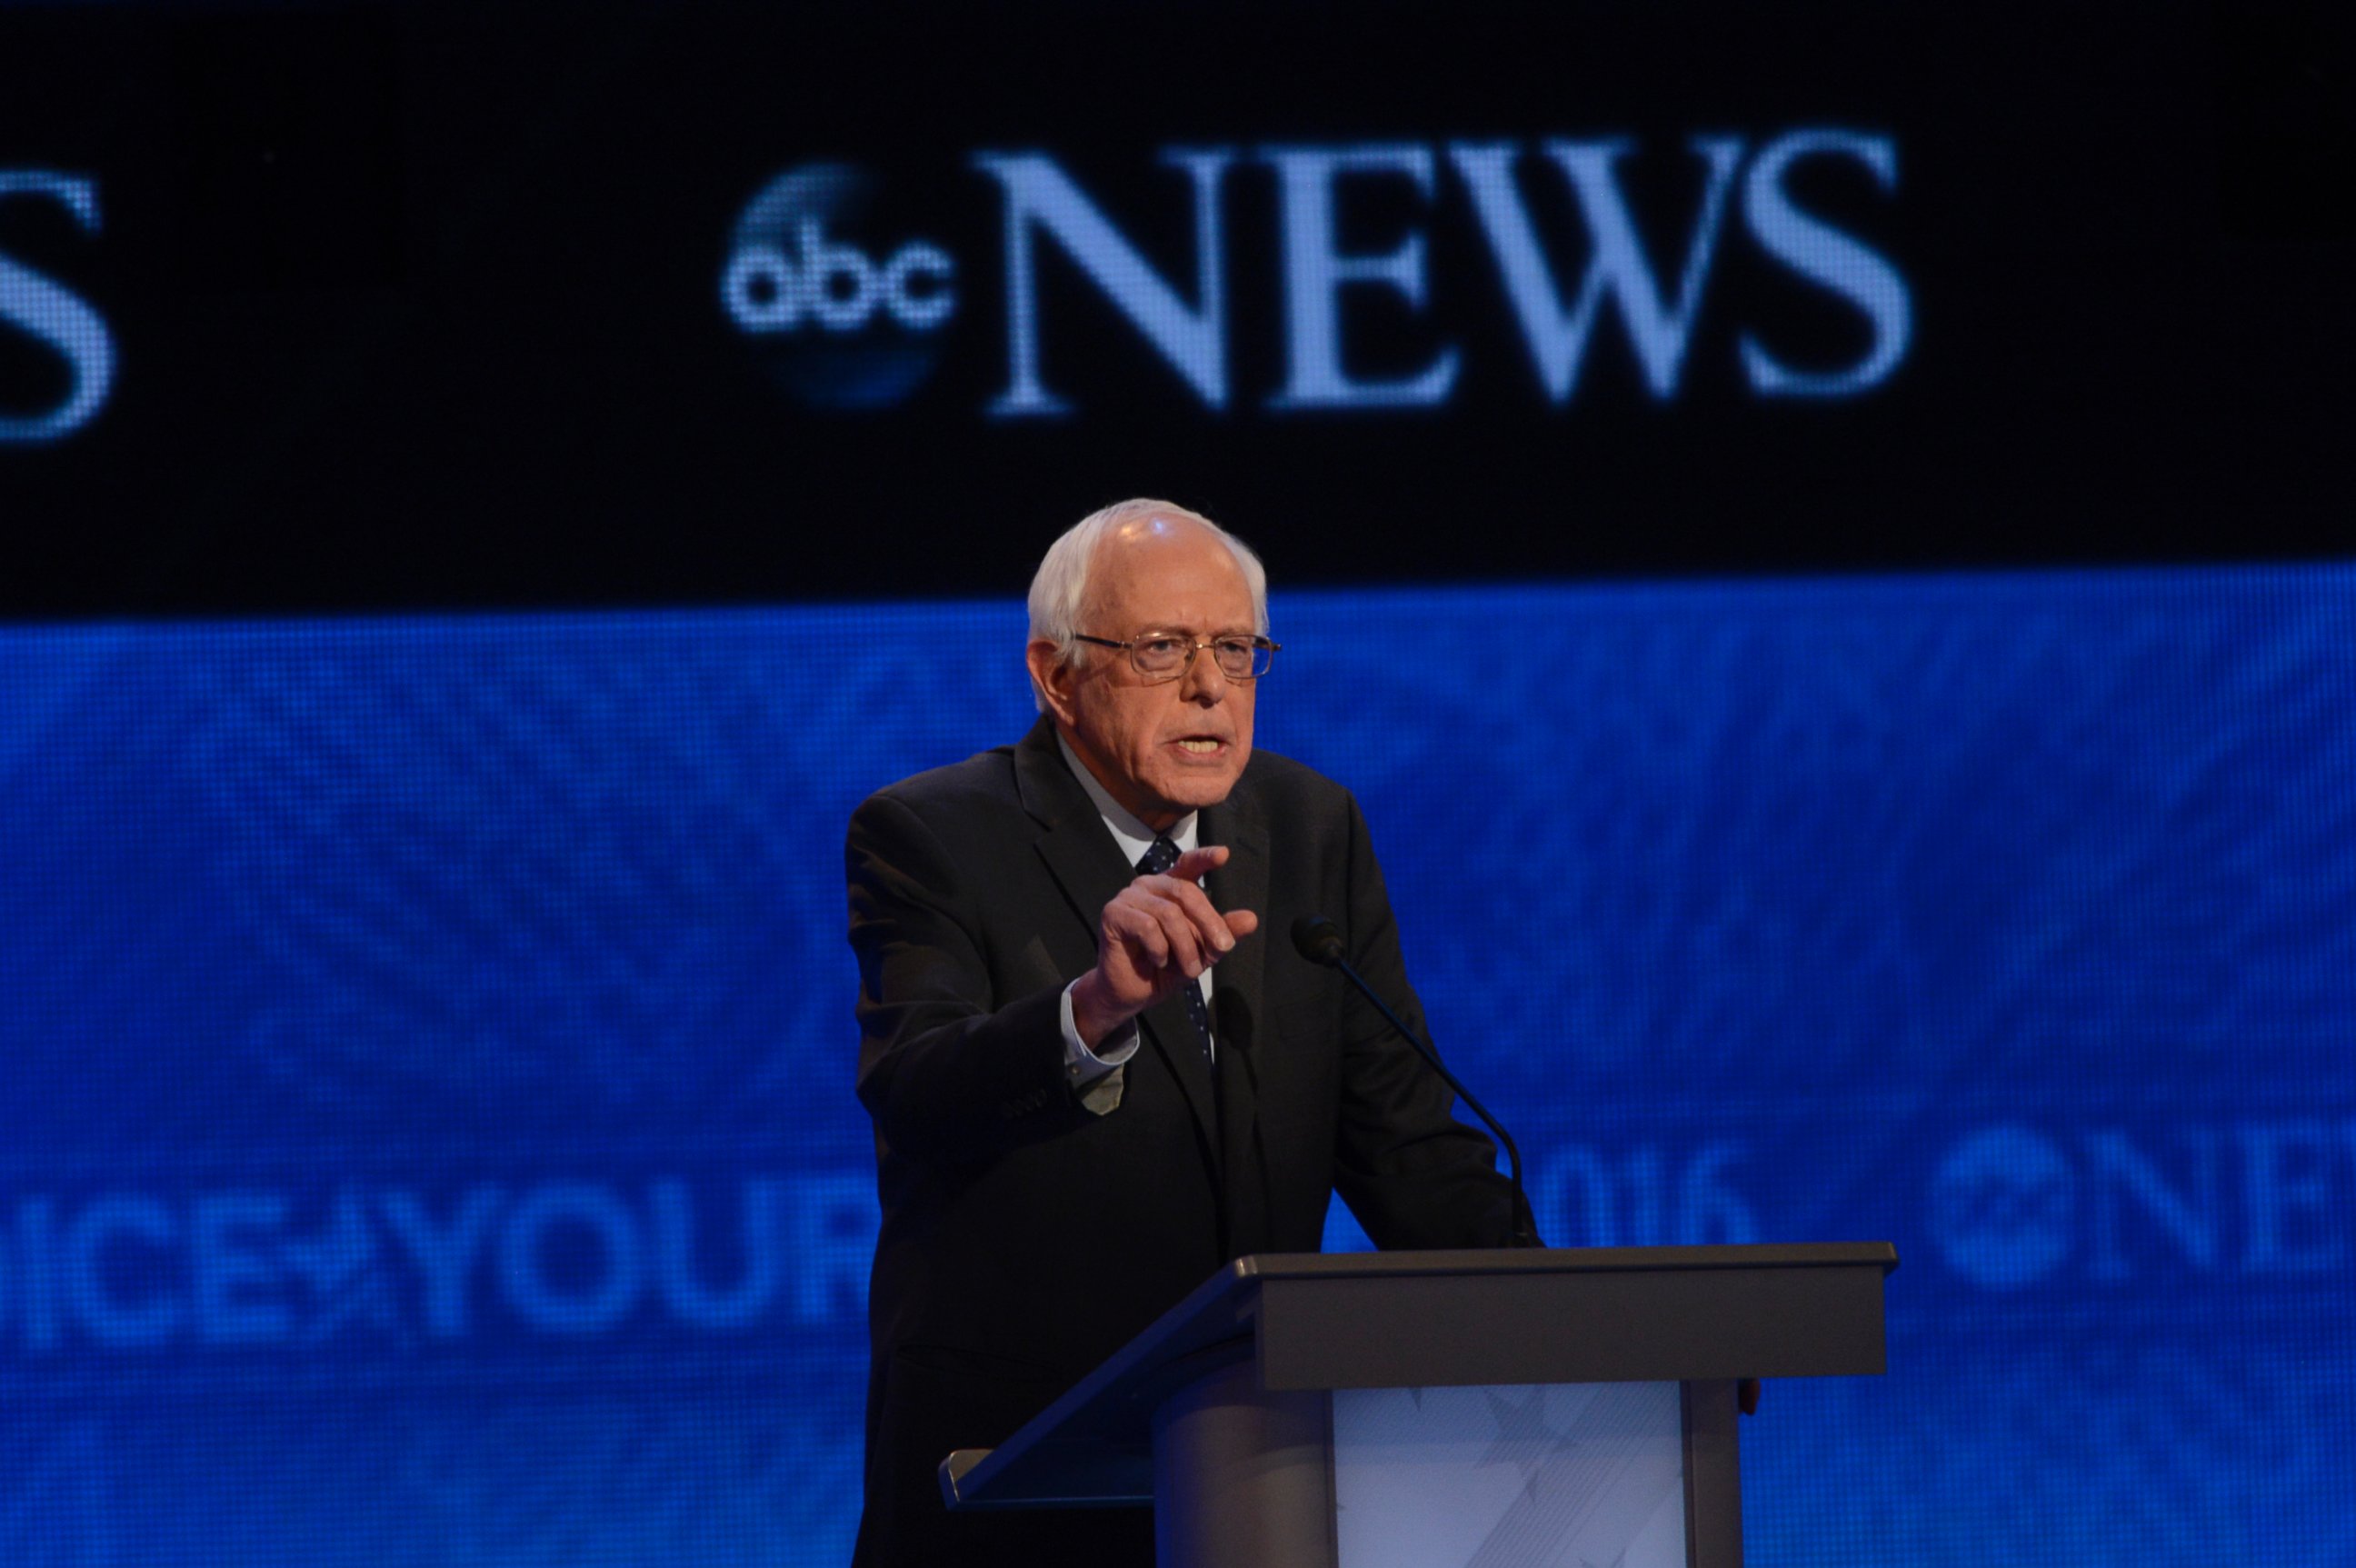 PHOTO: Sen. Bernie Sanders spoke at the Democratic Presidential debate at St. Anselm College in Manchester, NH.